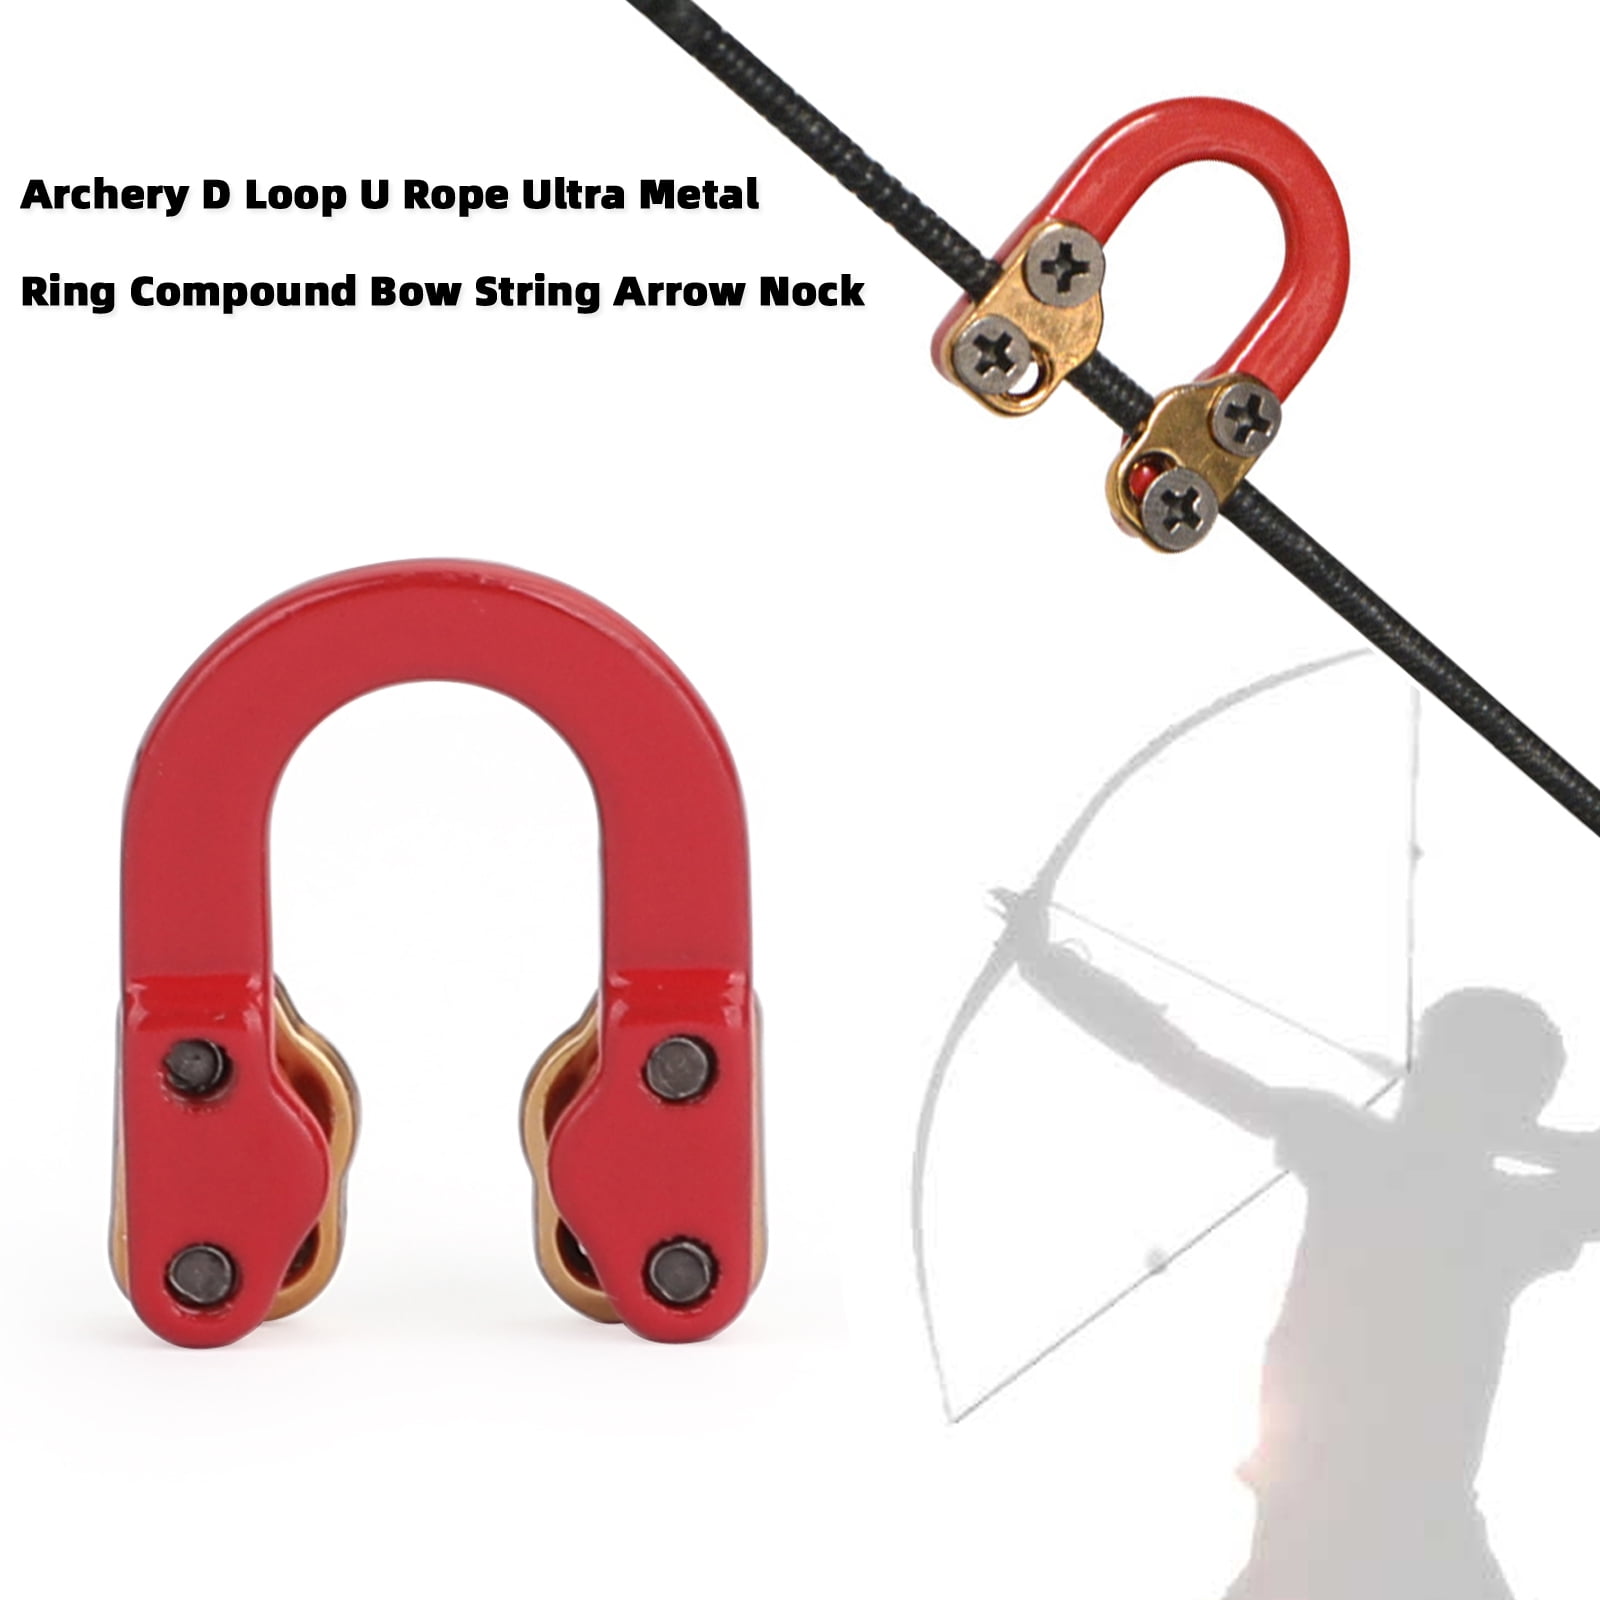 Details about   Bogenschießen D Loop Metallring Compound Bow String Arrow Nock U Rope Loop 